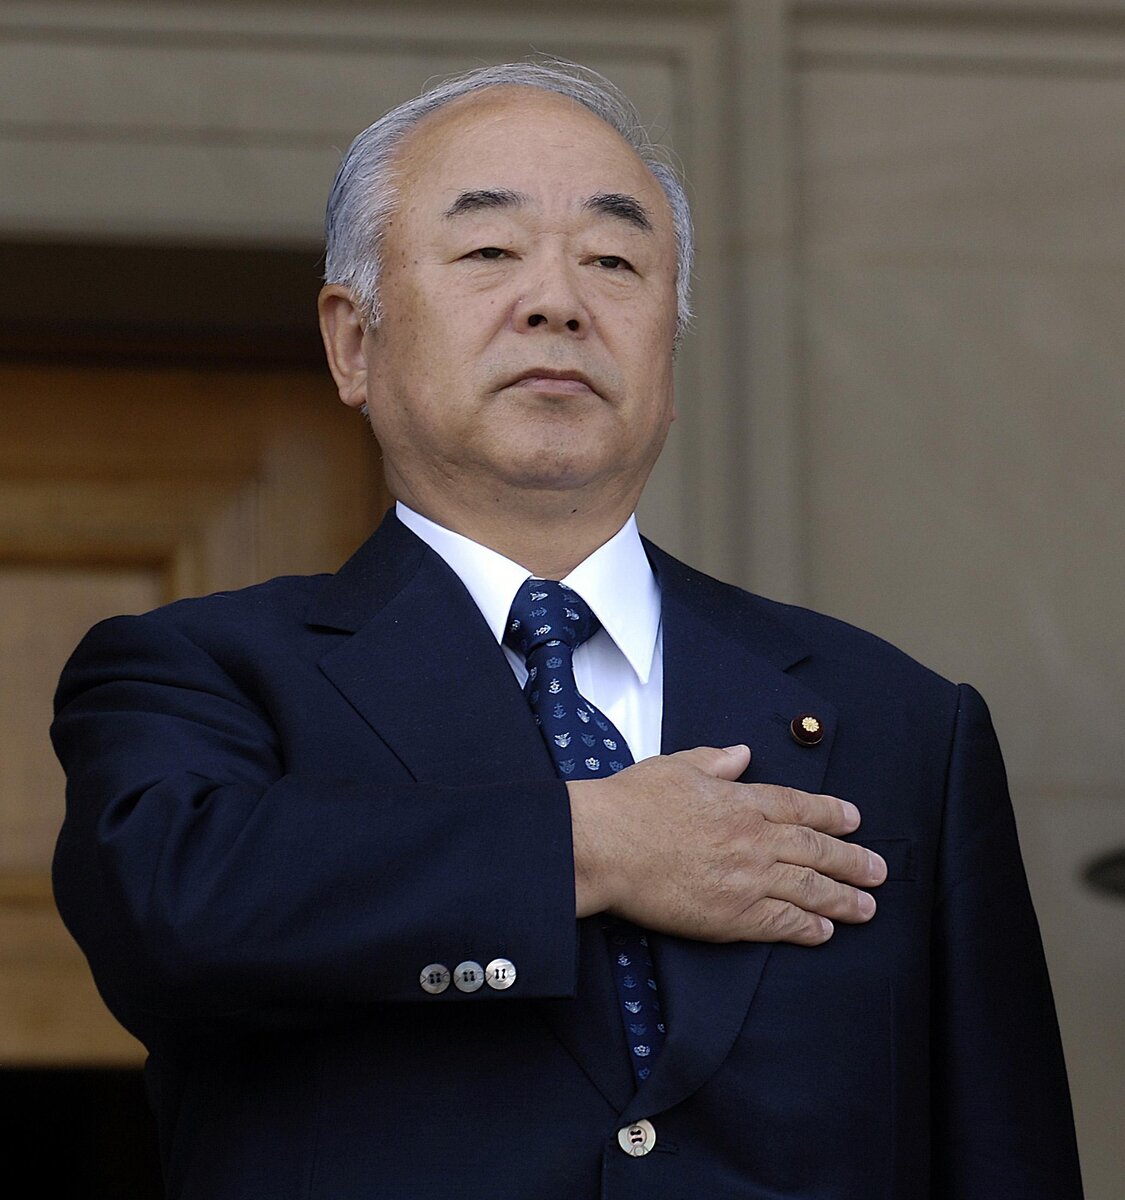 Фумио Кюма, бывший Министр обороны. Источник фото: https://ru.citaty.net/avtory/kiuma-fumio/?o=popular